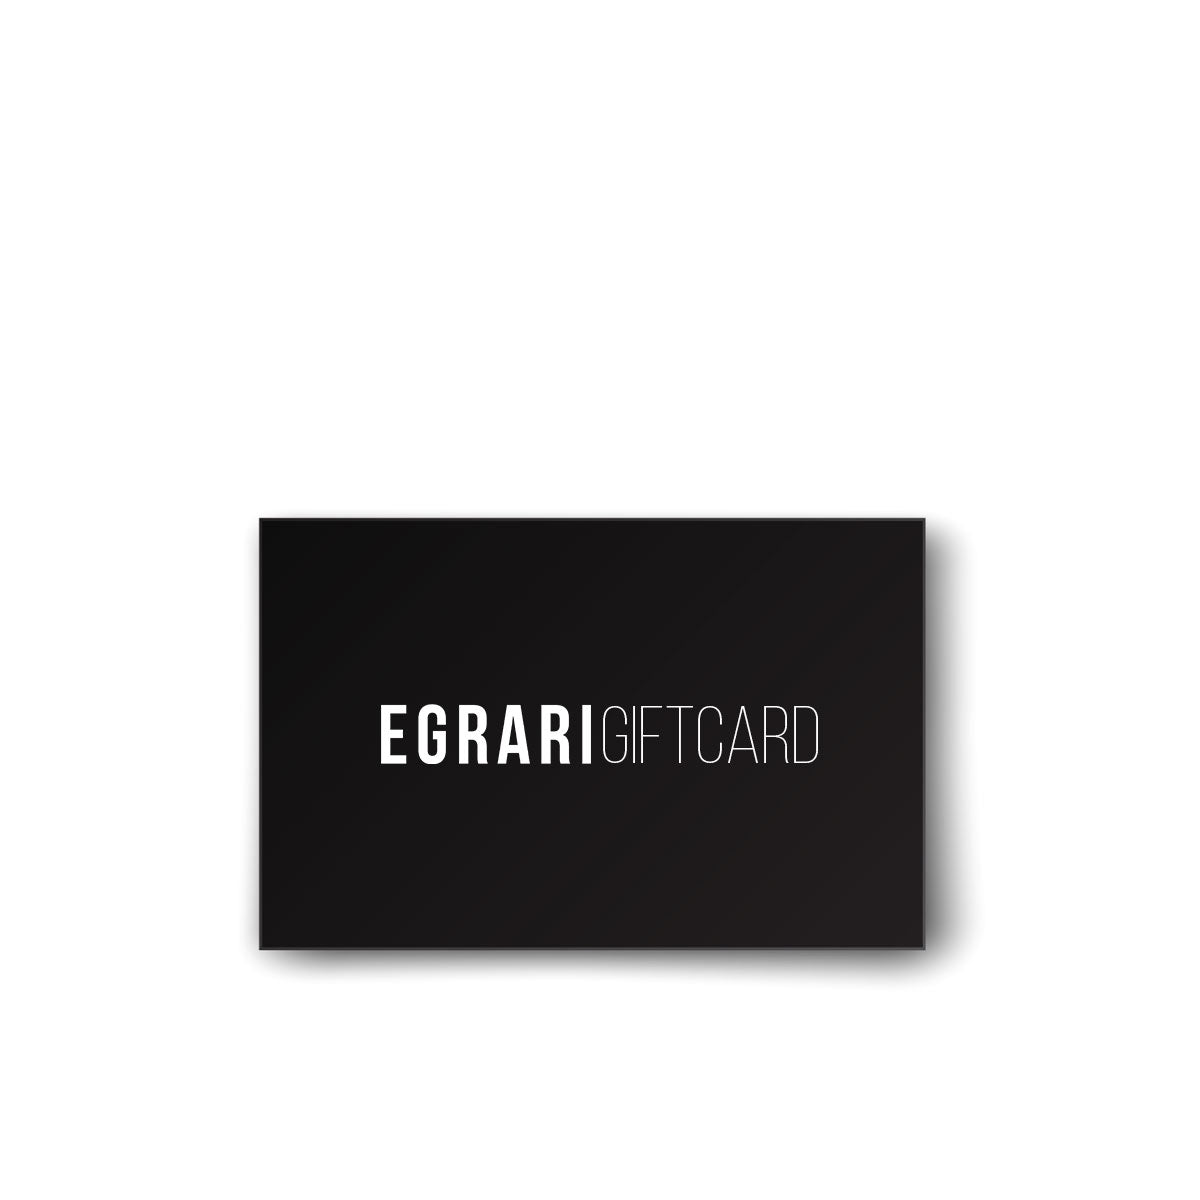 Egrari Night of Beauty gift card discount